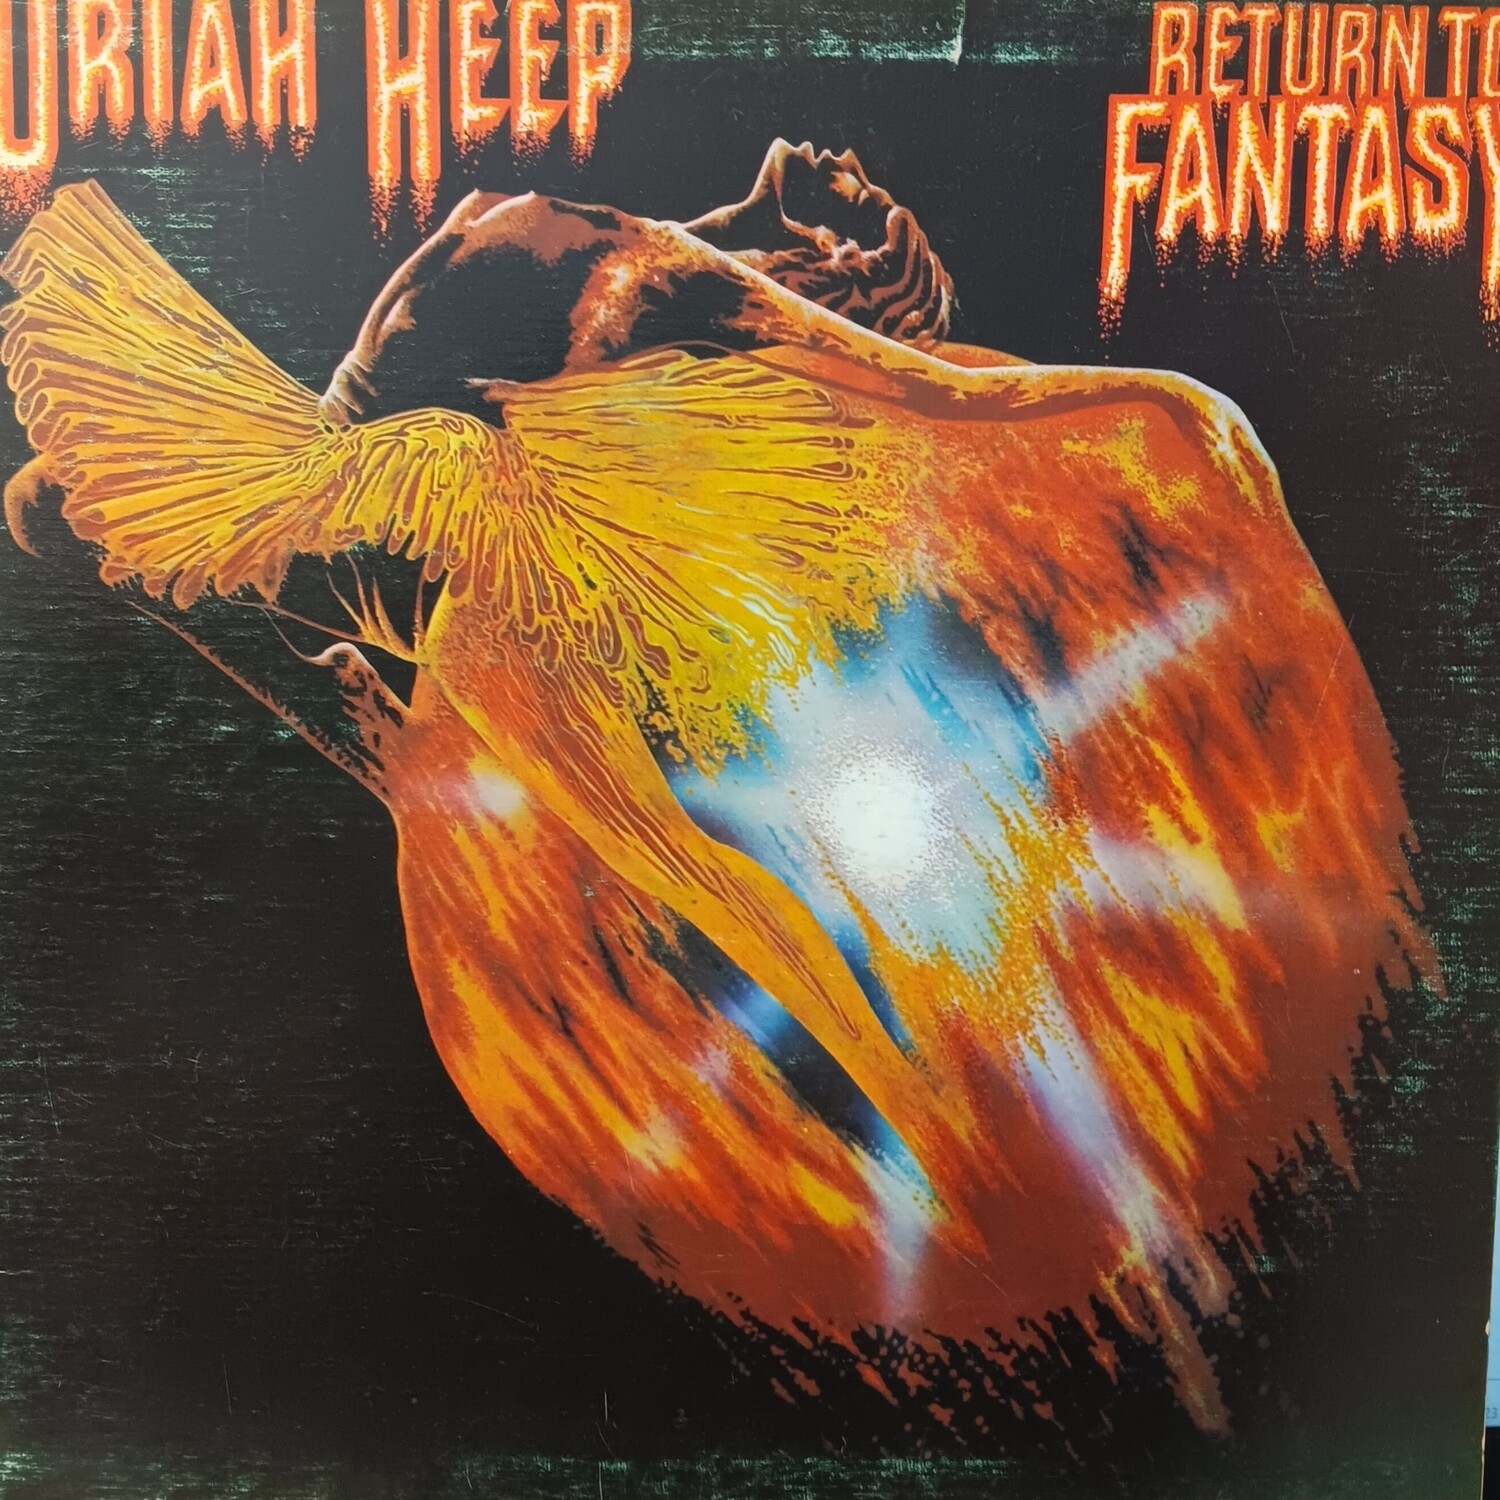 URIAH HEEP - Return to fantasy